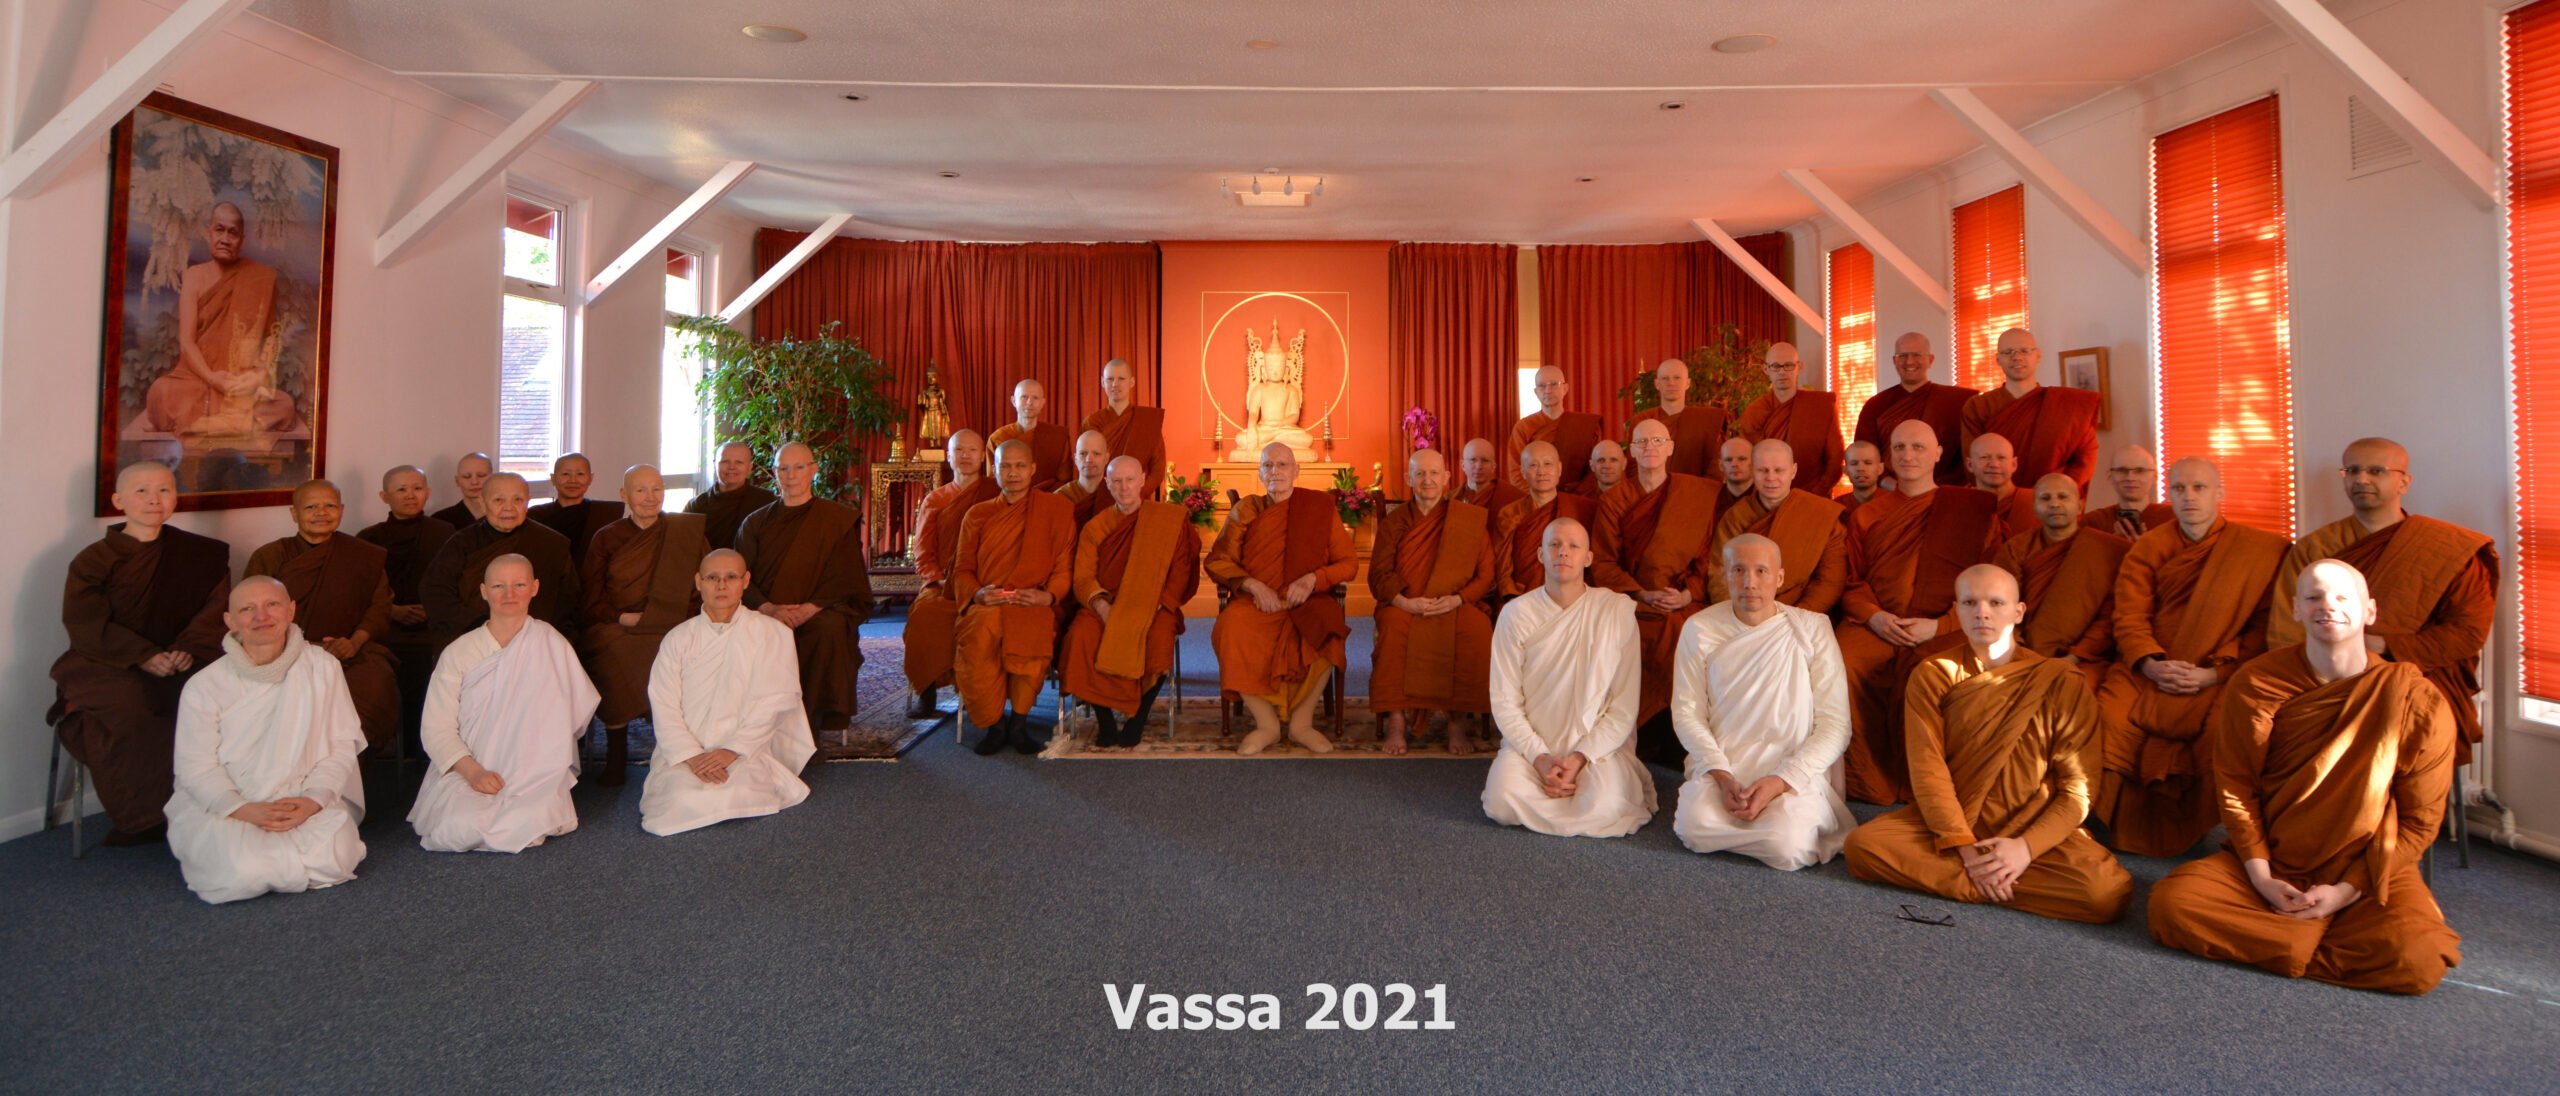 2021.10.21 Group Photo – Amaravati Monastic Community – Vassa 2021